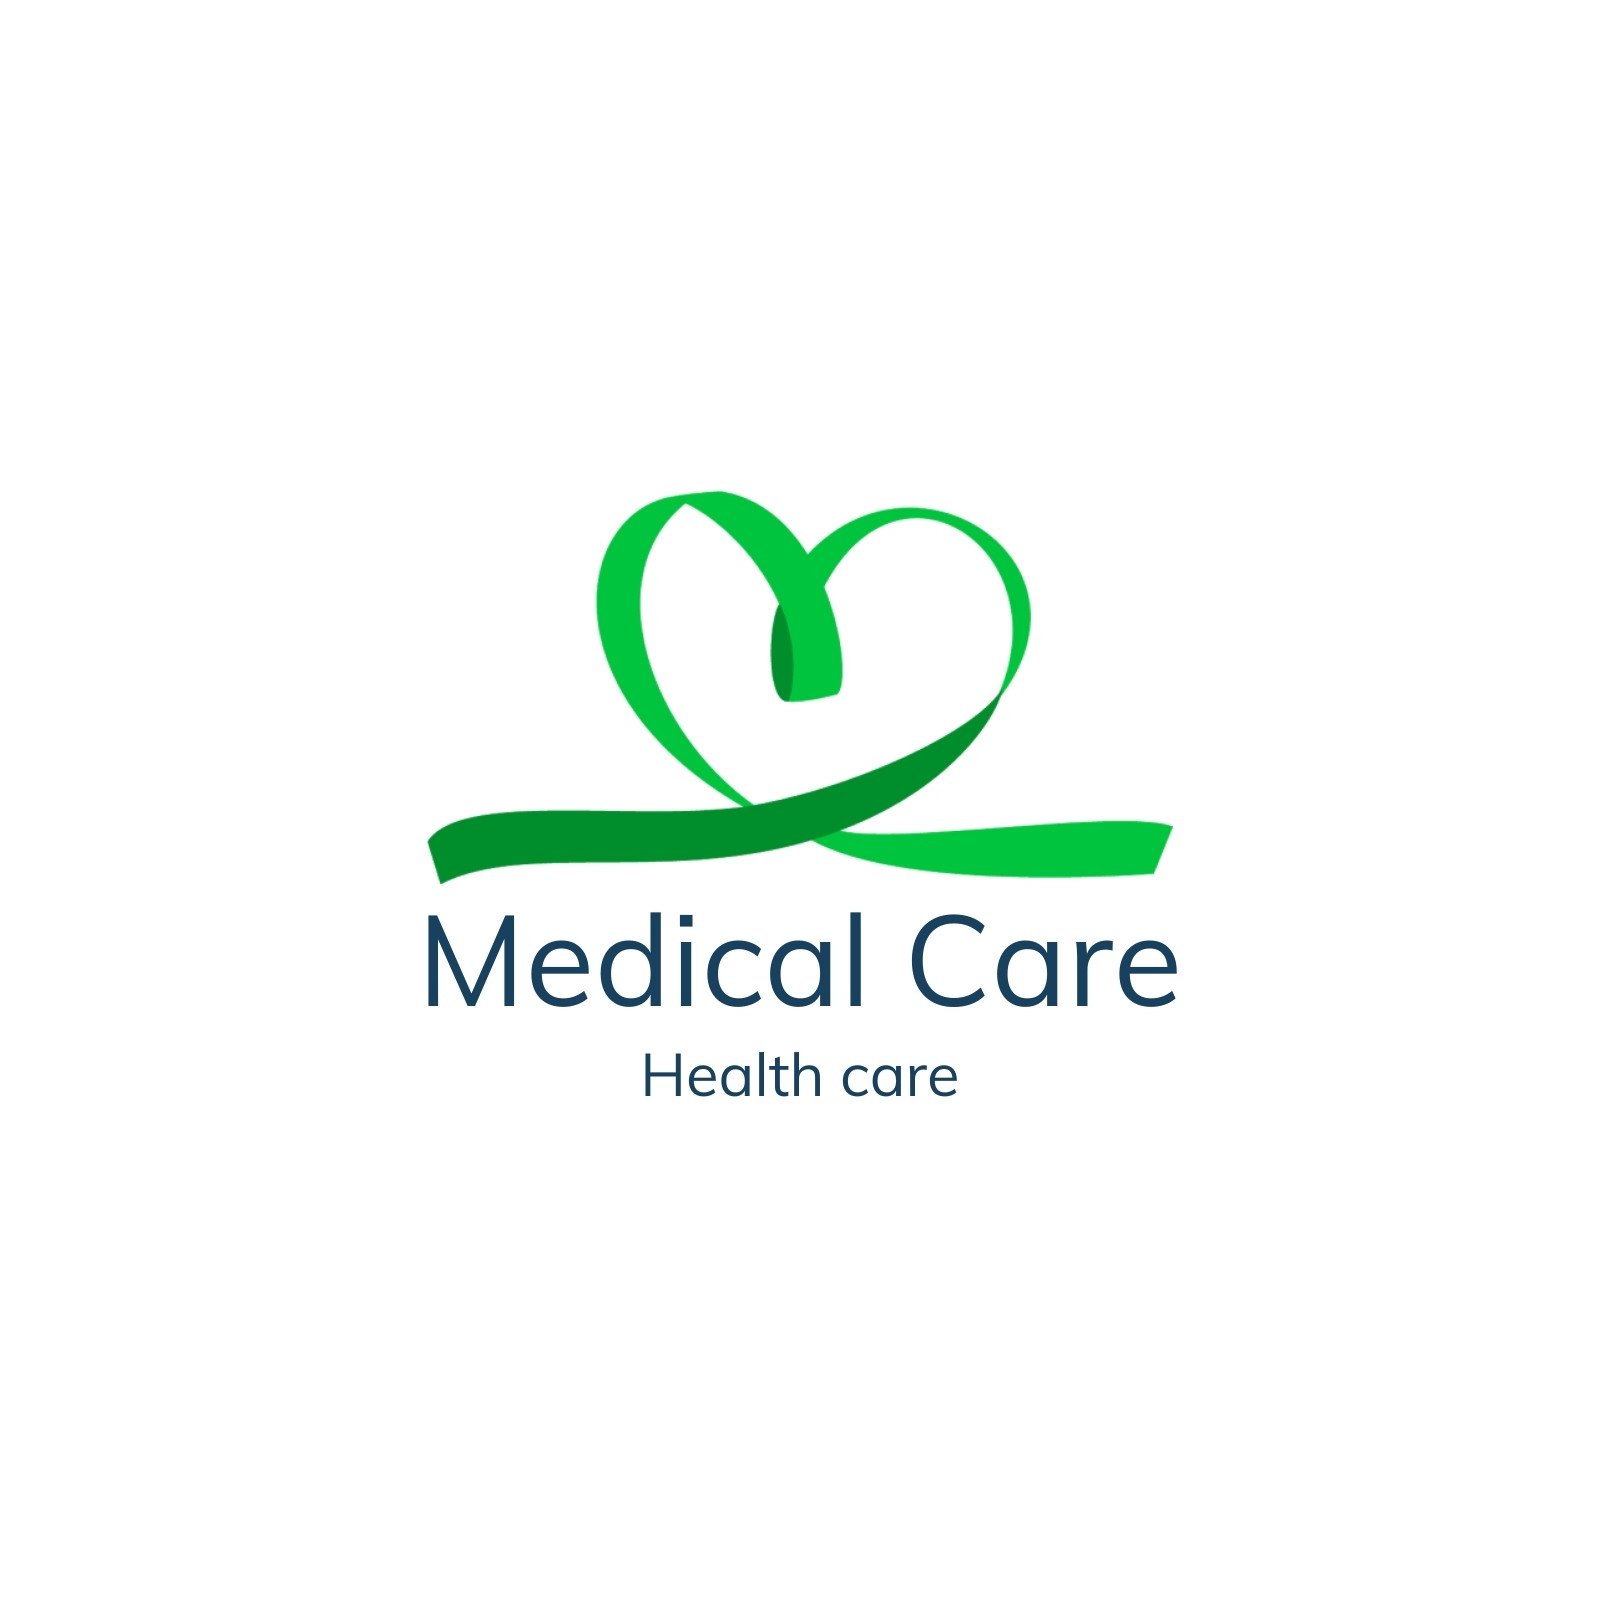 Free printable, customizable hospital logo templates | Canva